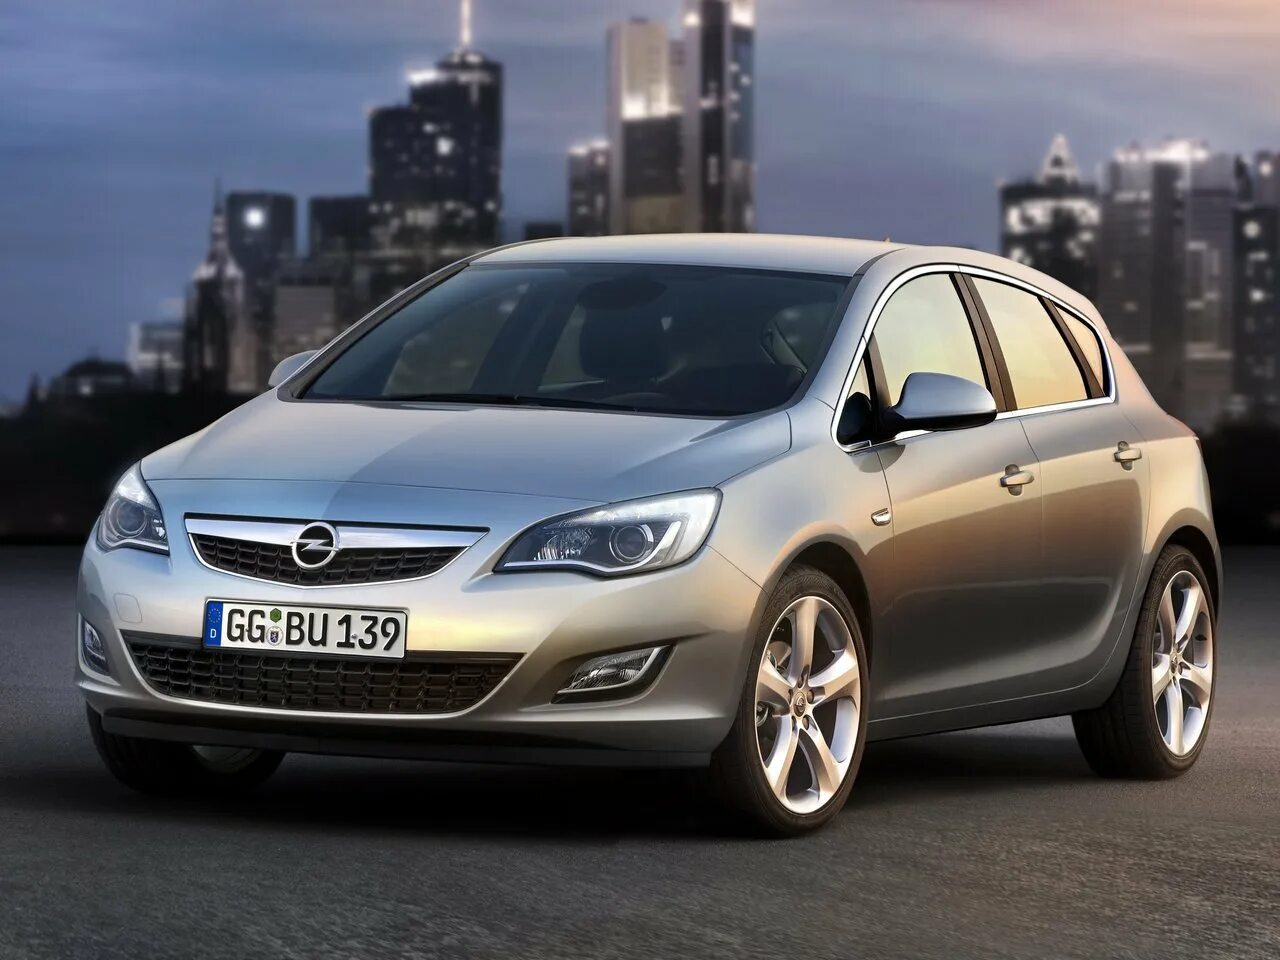 Opel Astra j. Opel Astra j 2010. Opel Astra j 2009. Opel Astra Hatchback. Td opel